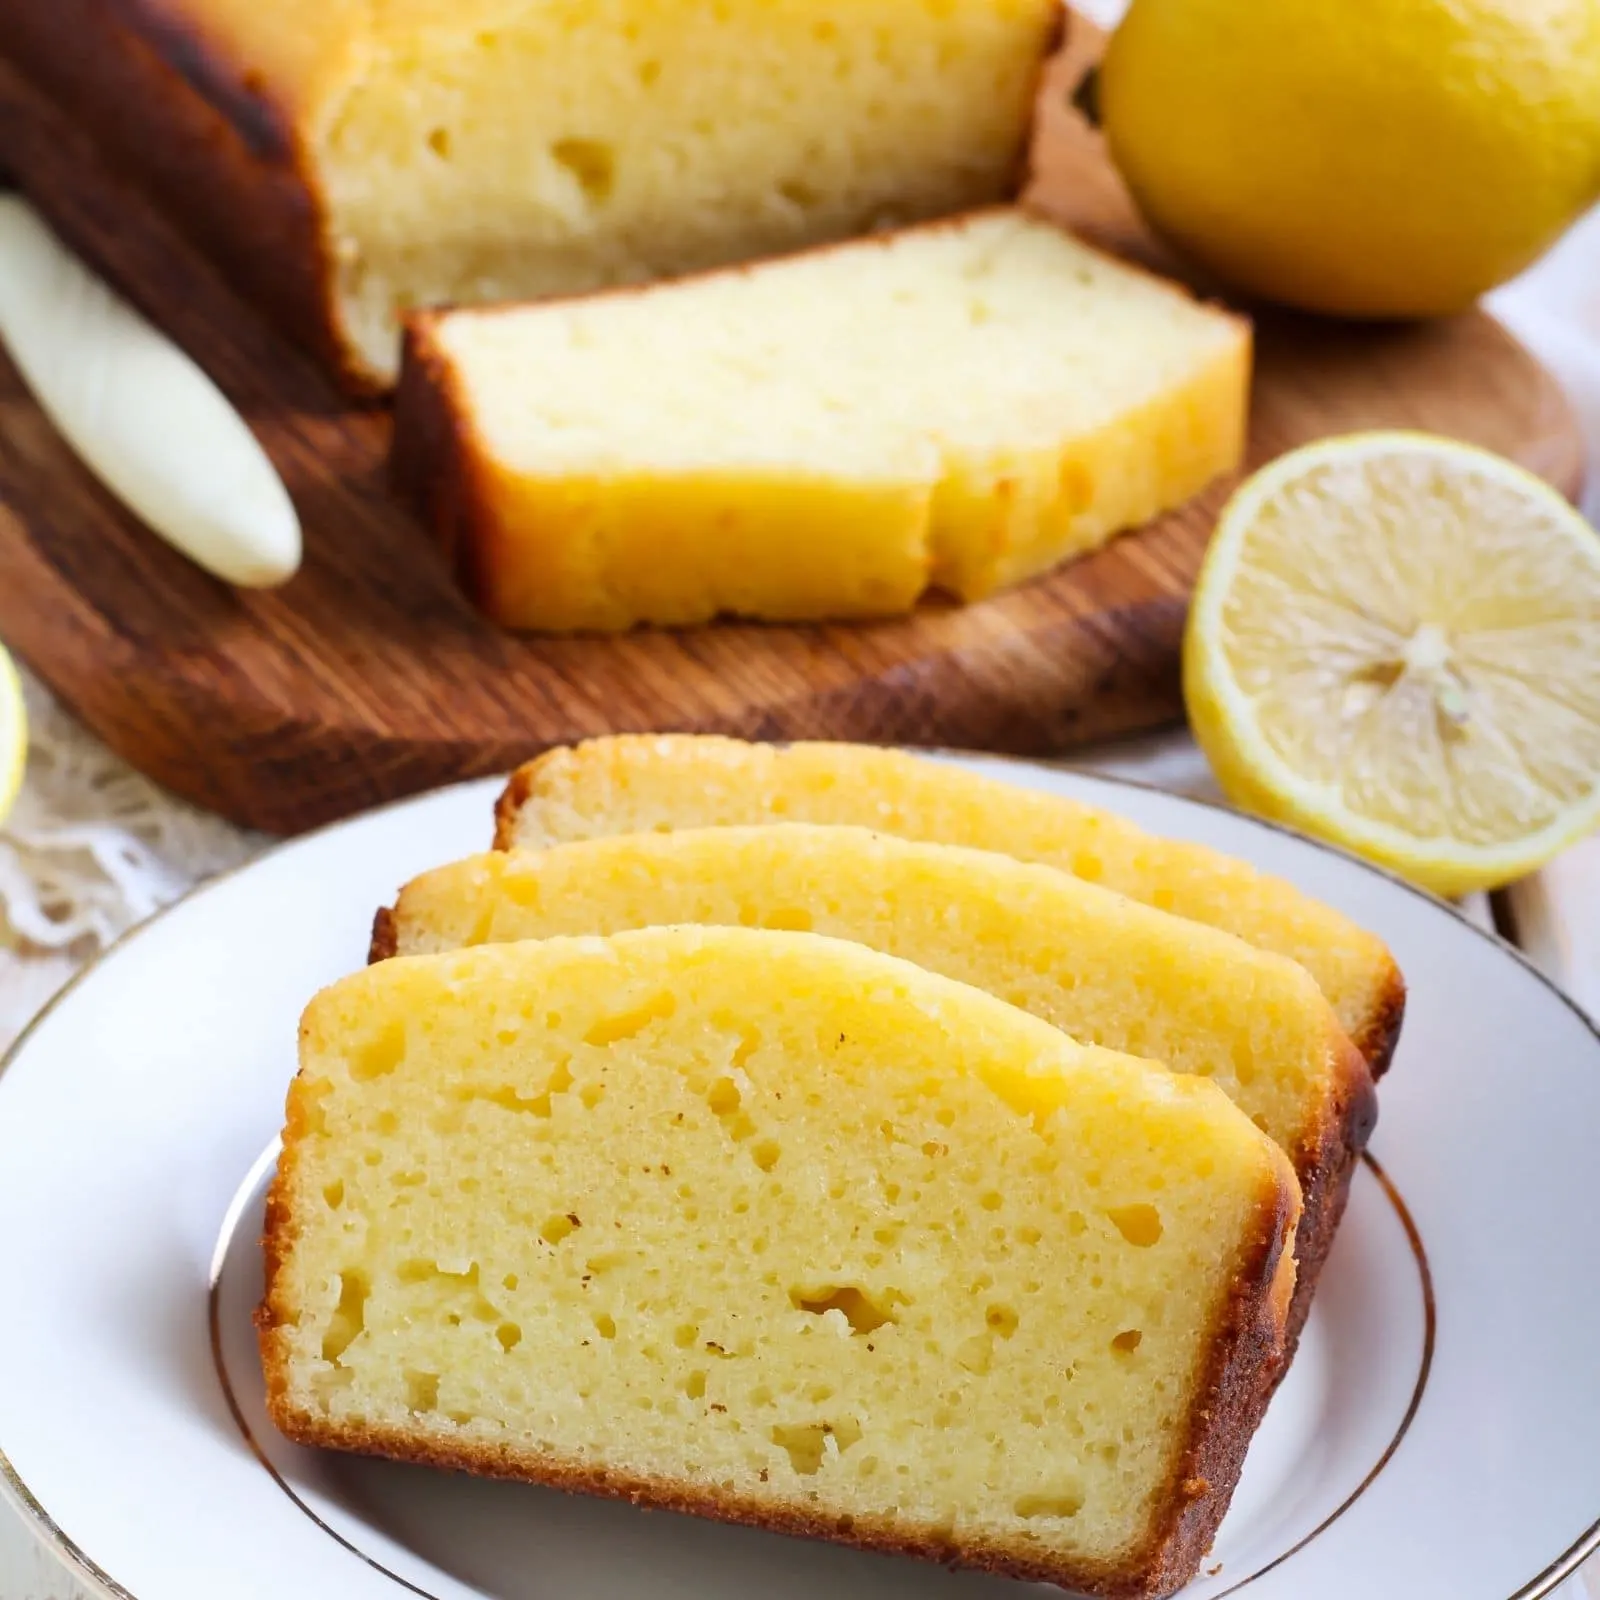 Lemon Pound Cake {Easy Pound Cake Loaf Recipe}